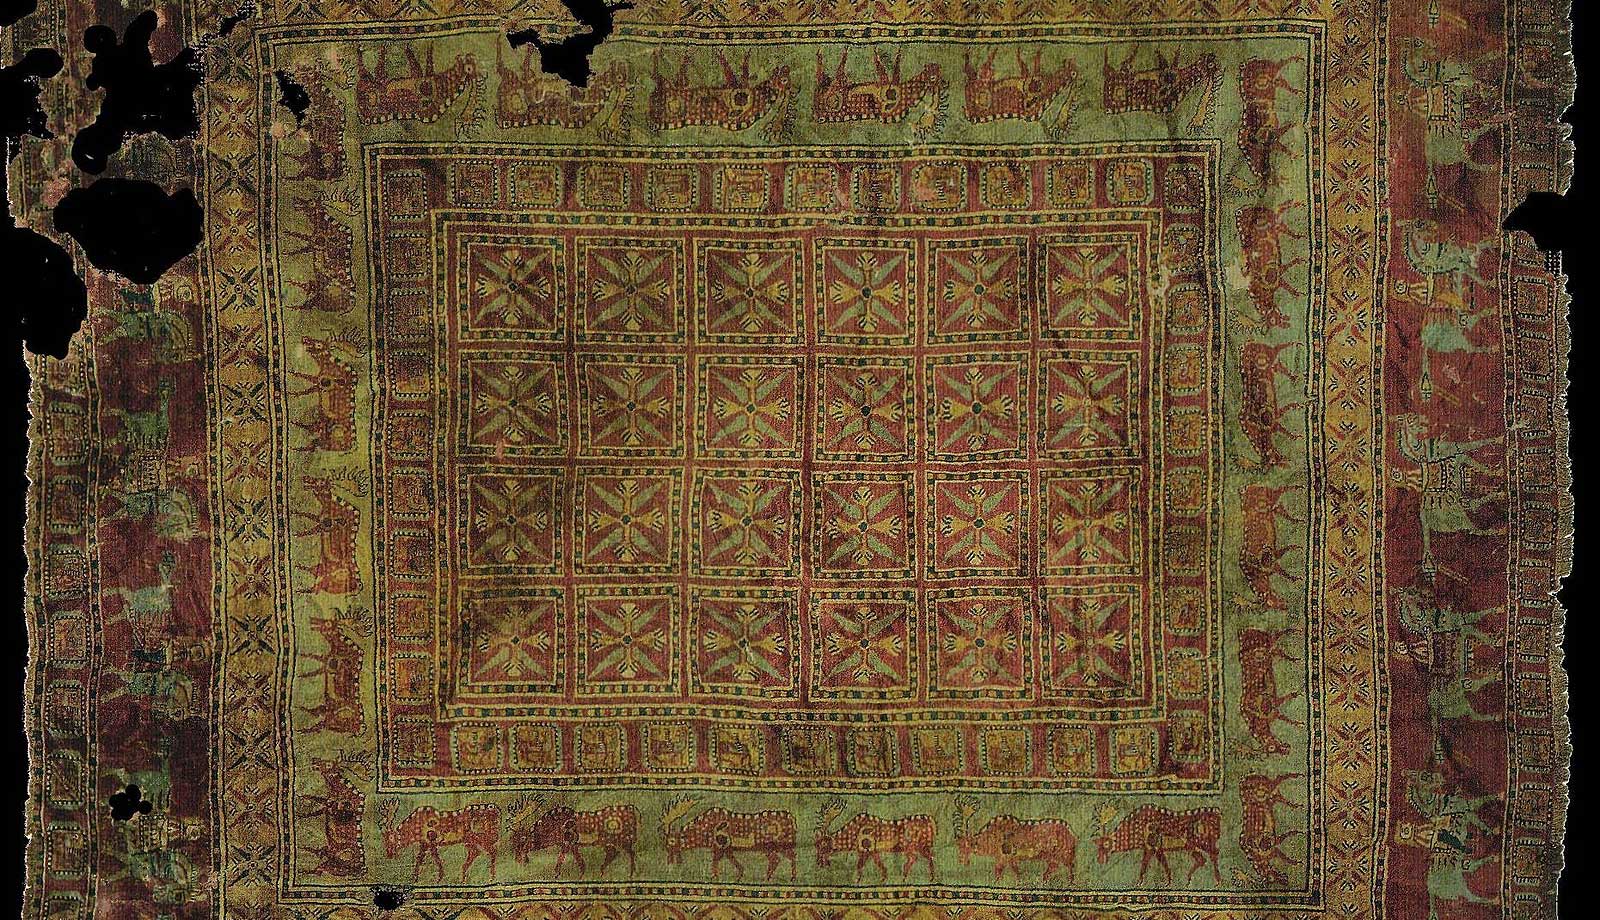 The Pazyryk Carpet